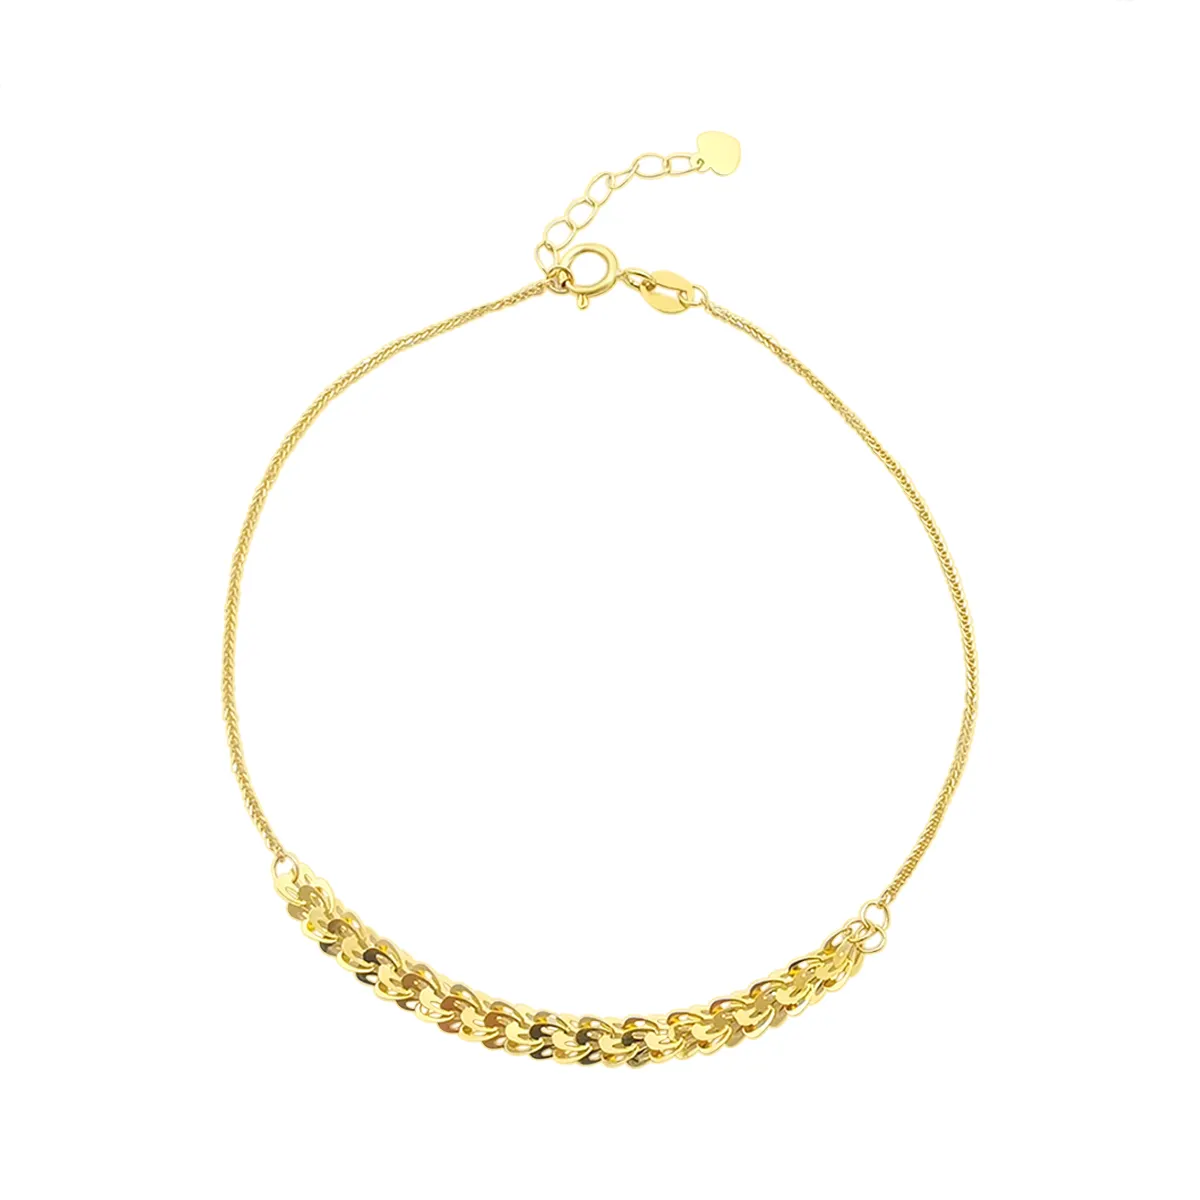 Fashion 18K Real Gold Bracelet Cheap Price New Design Light Weight 18K Genuine Yellow Gold Bracelet Drop Shipping